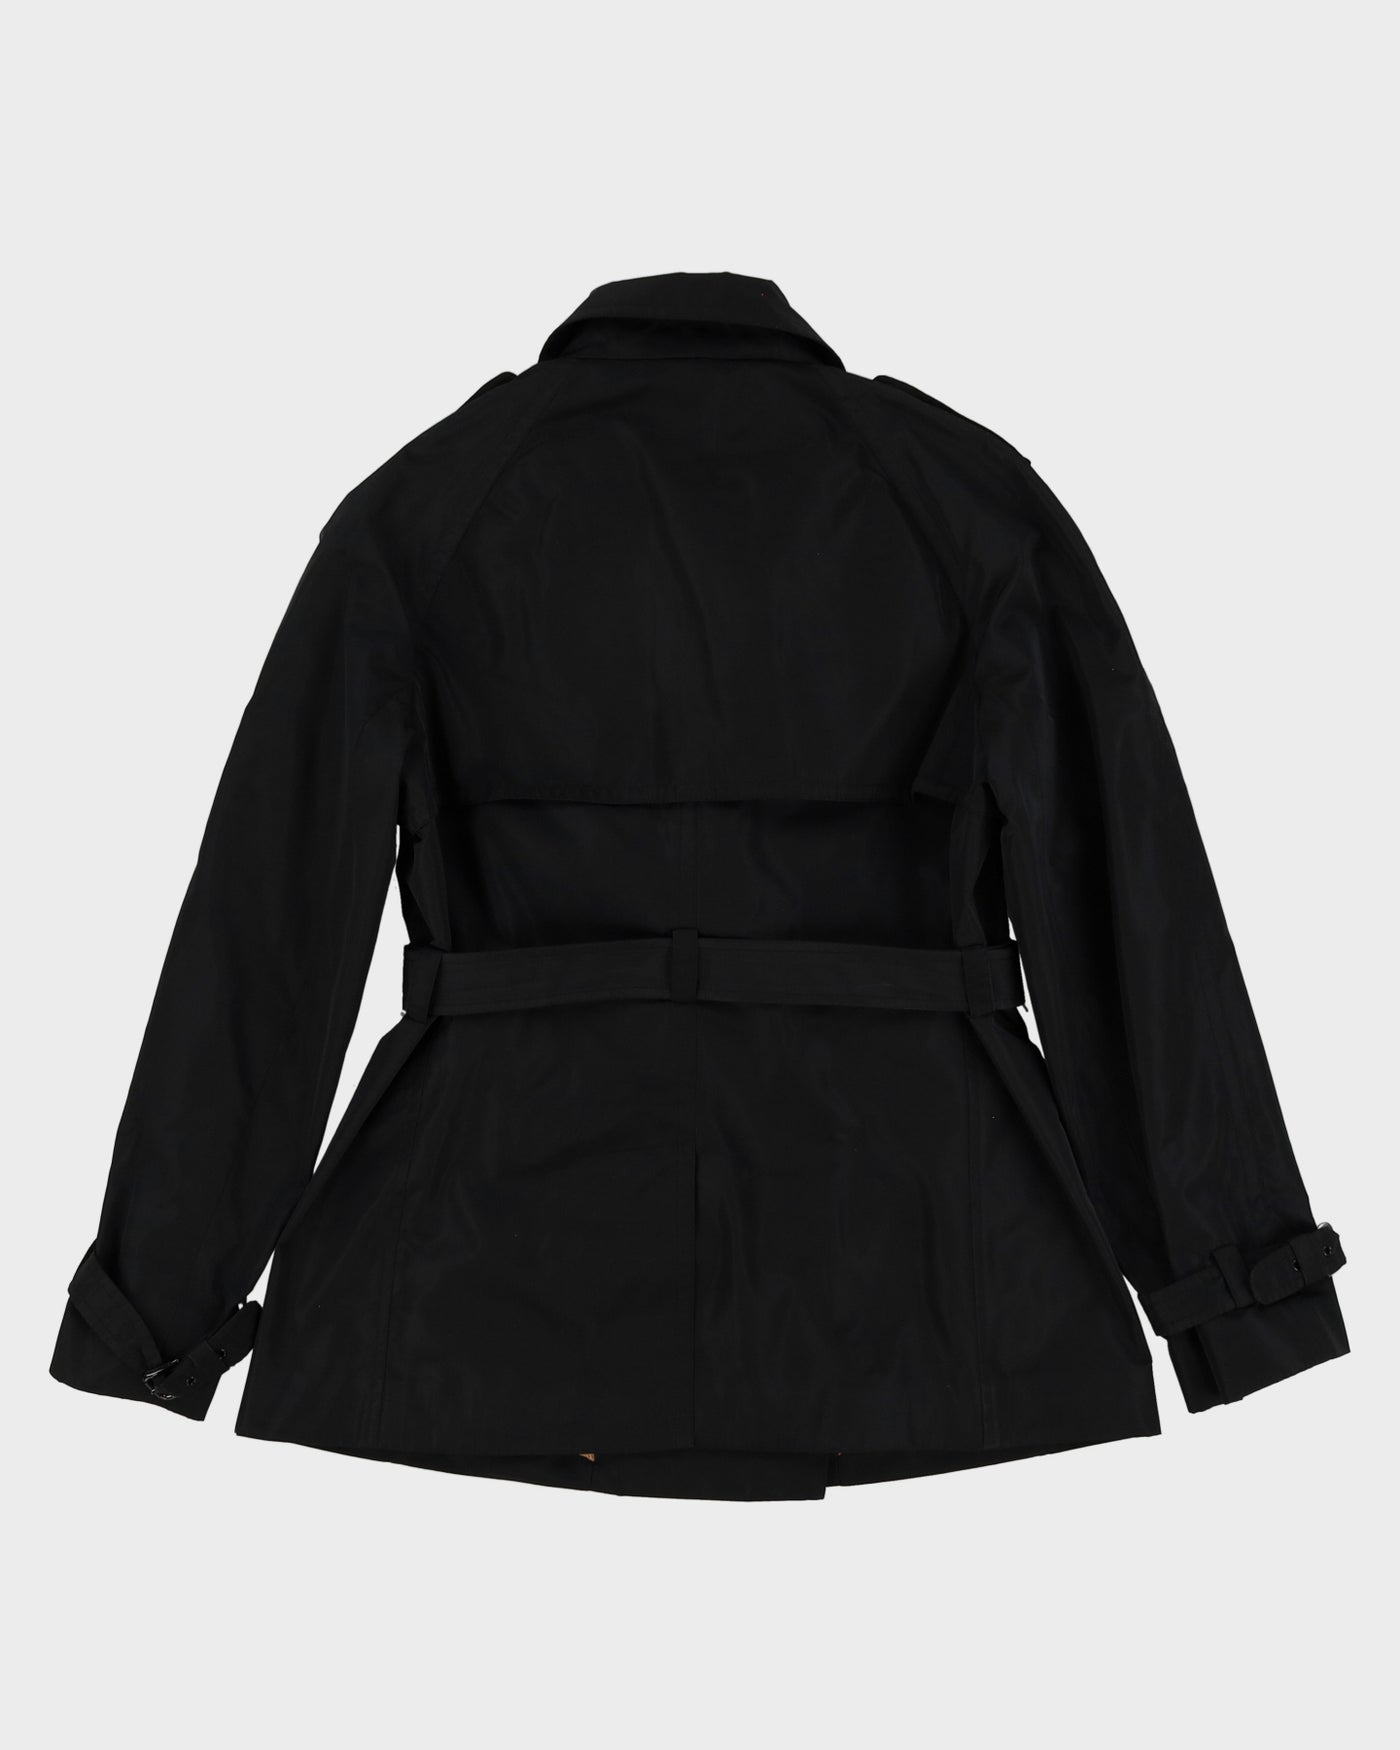 Dolce And Gabbana Black With Matching Belt Short Mac - M